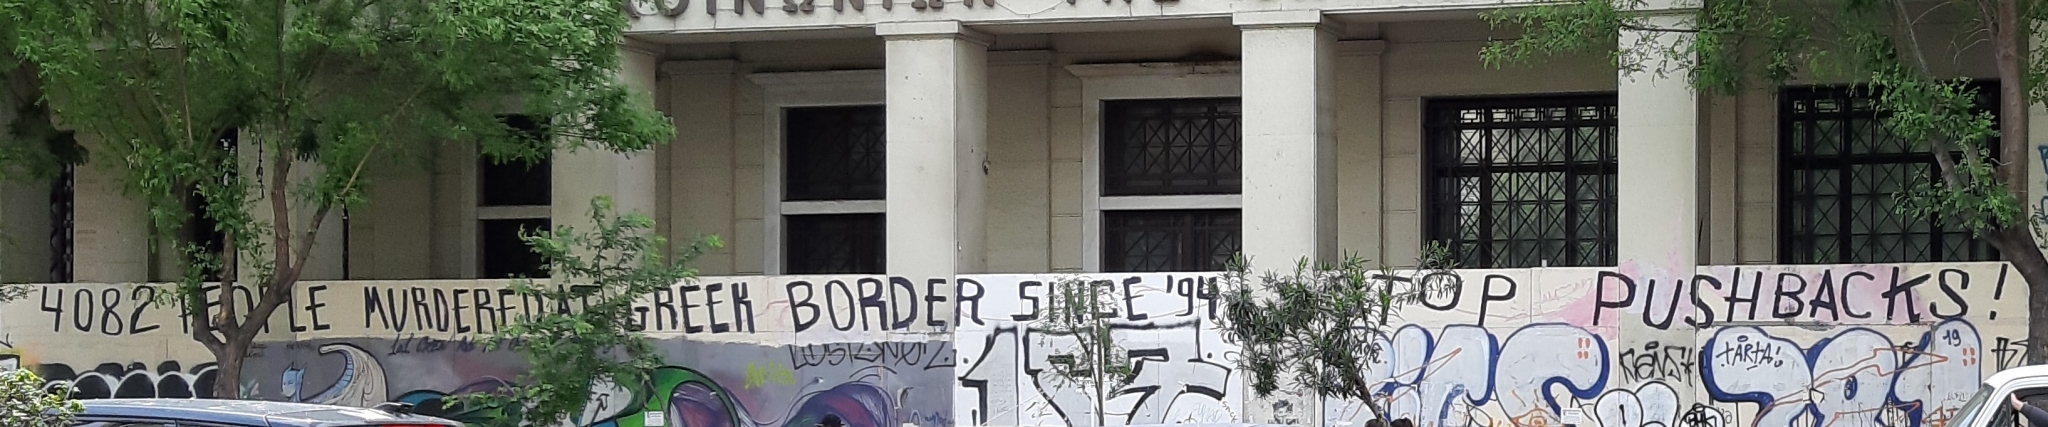 Graffiti zu Pushbacks in Athen